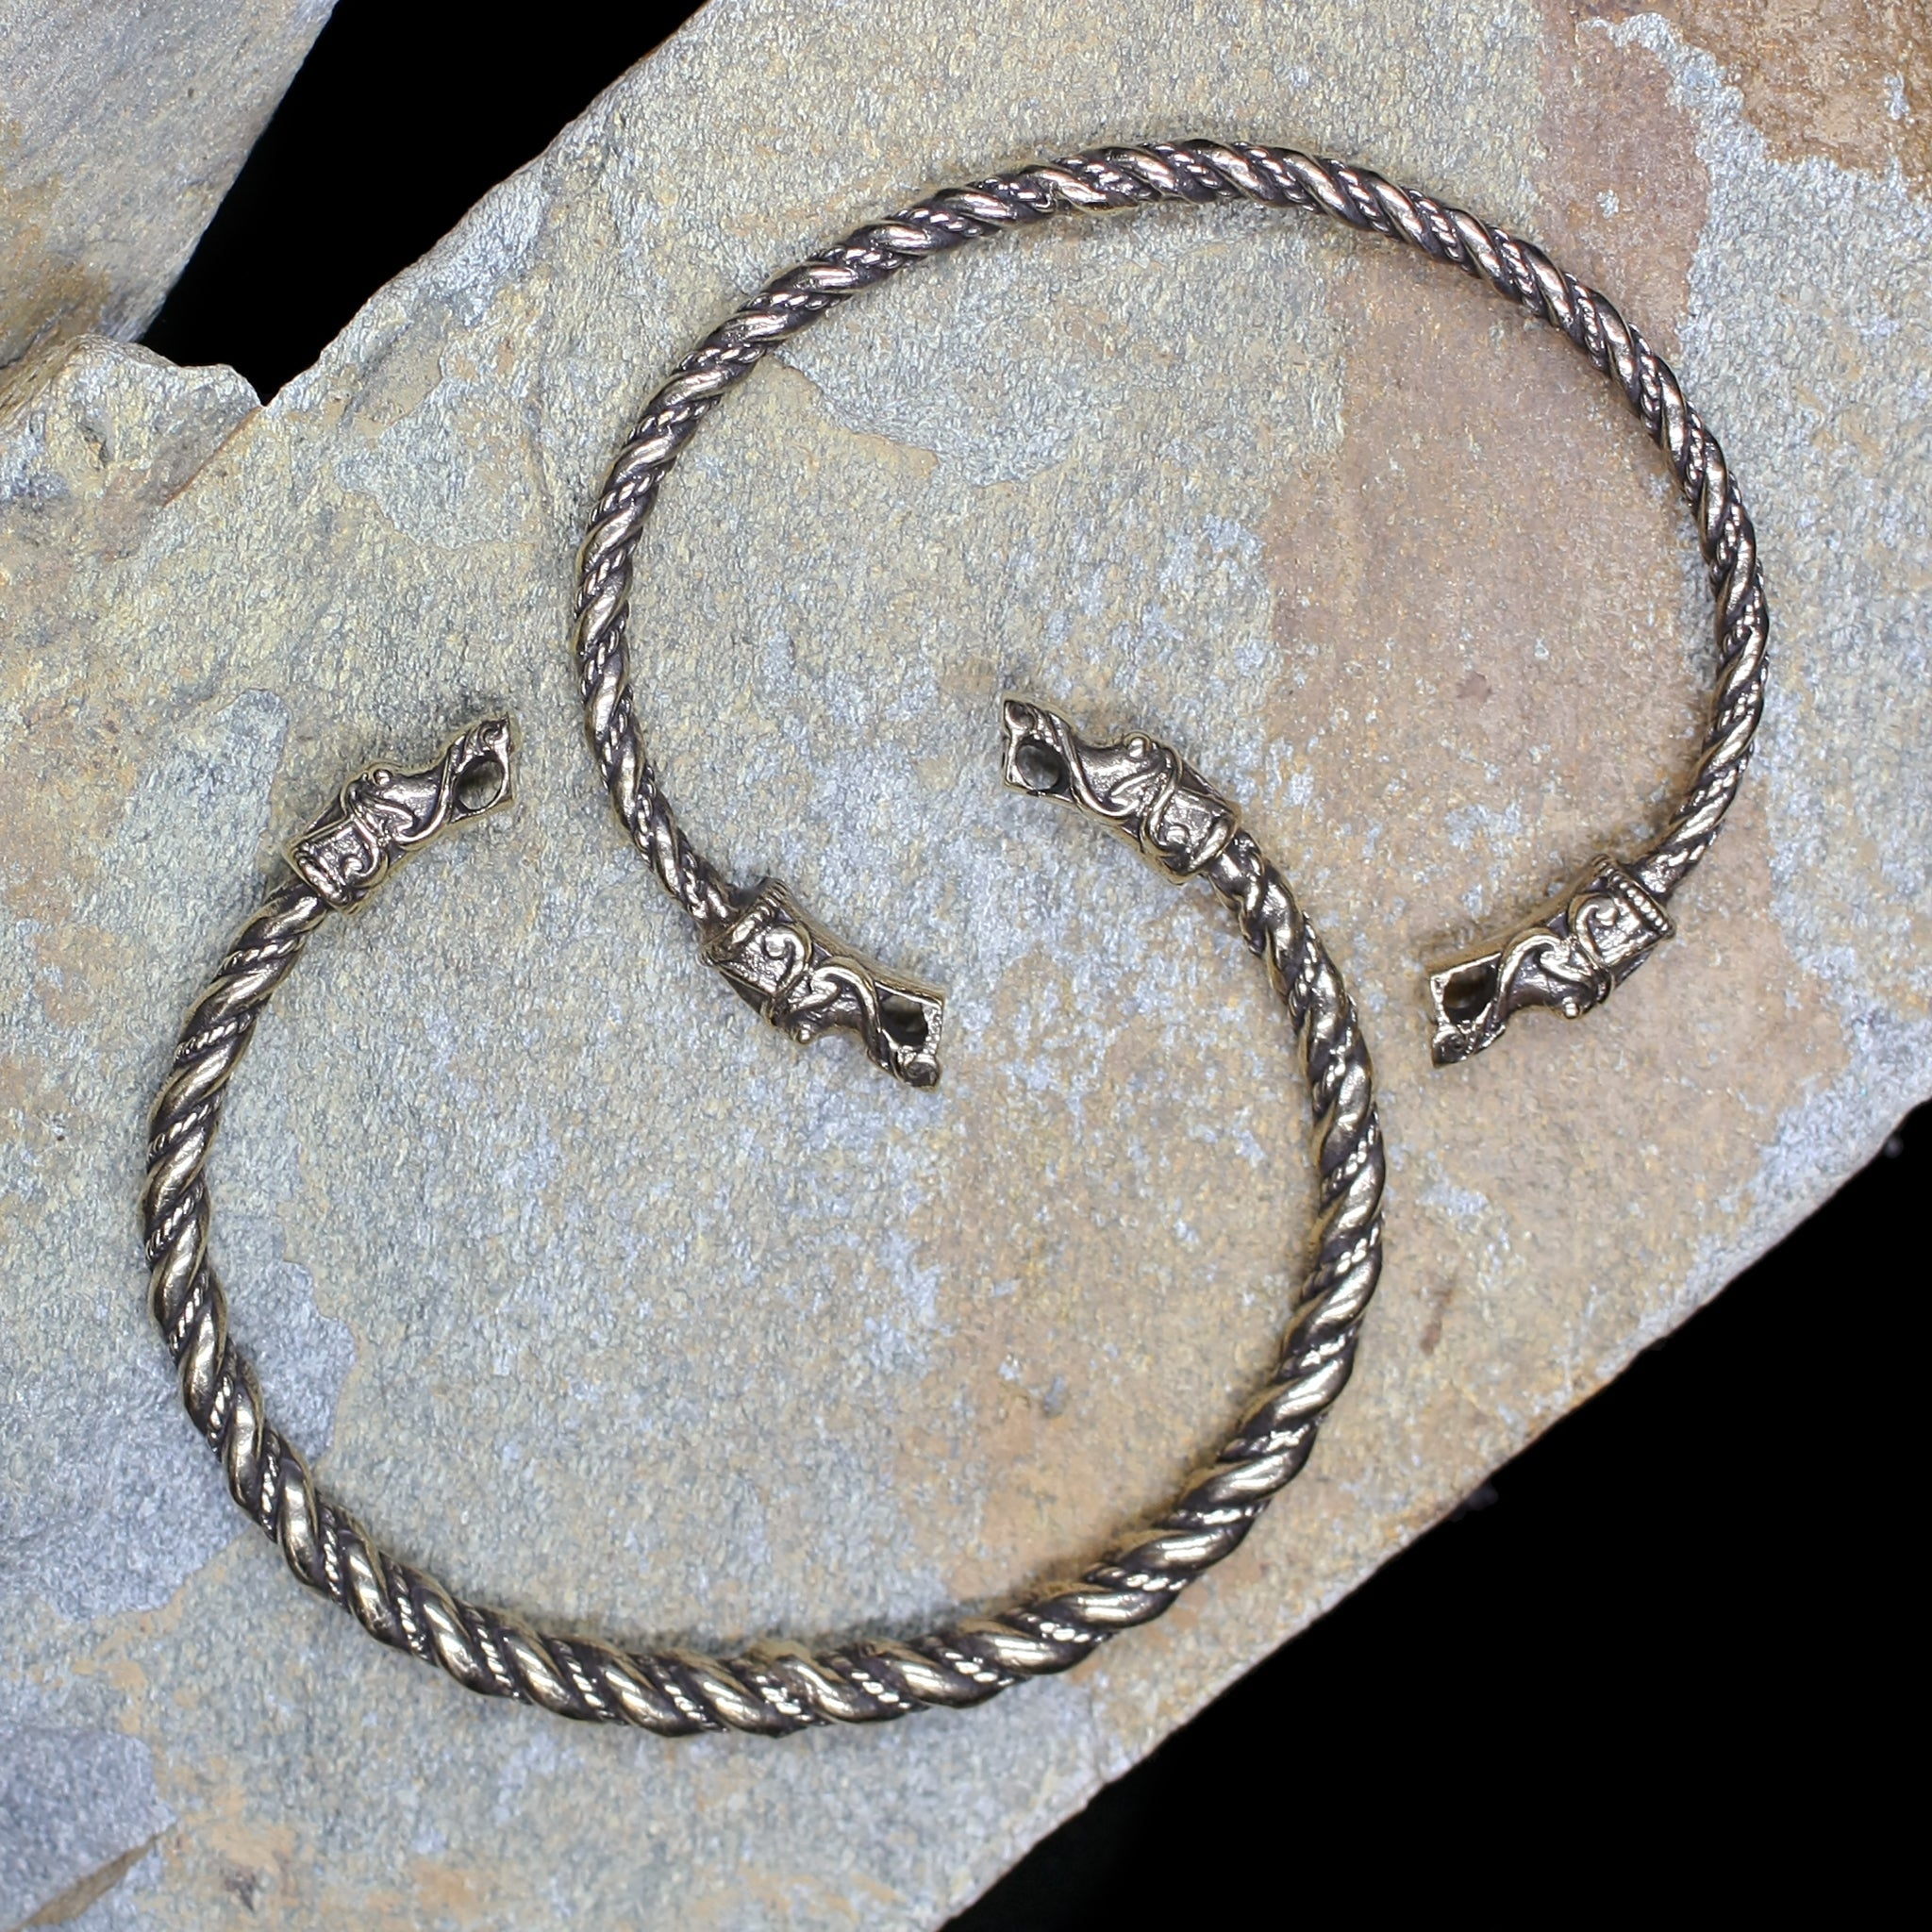 Twisted Bronze Bracelets With Gotlandic Dragon Heads on Rock